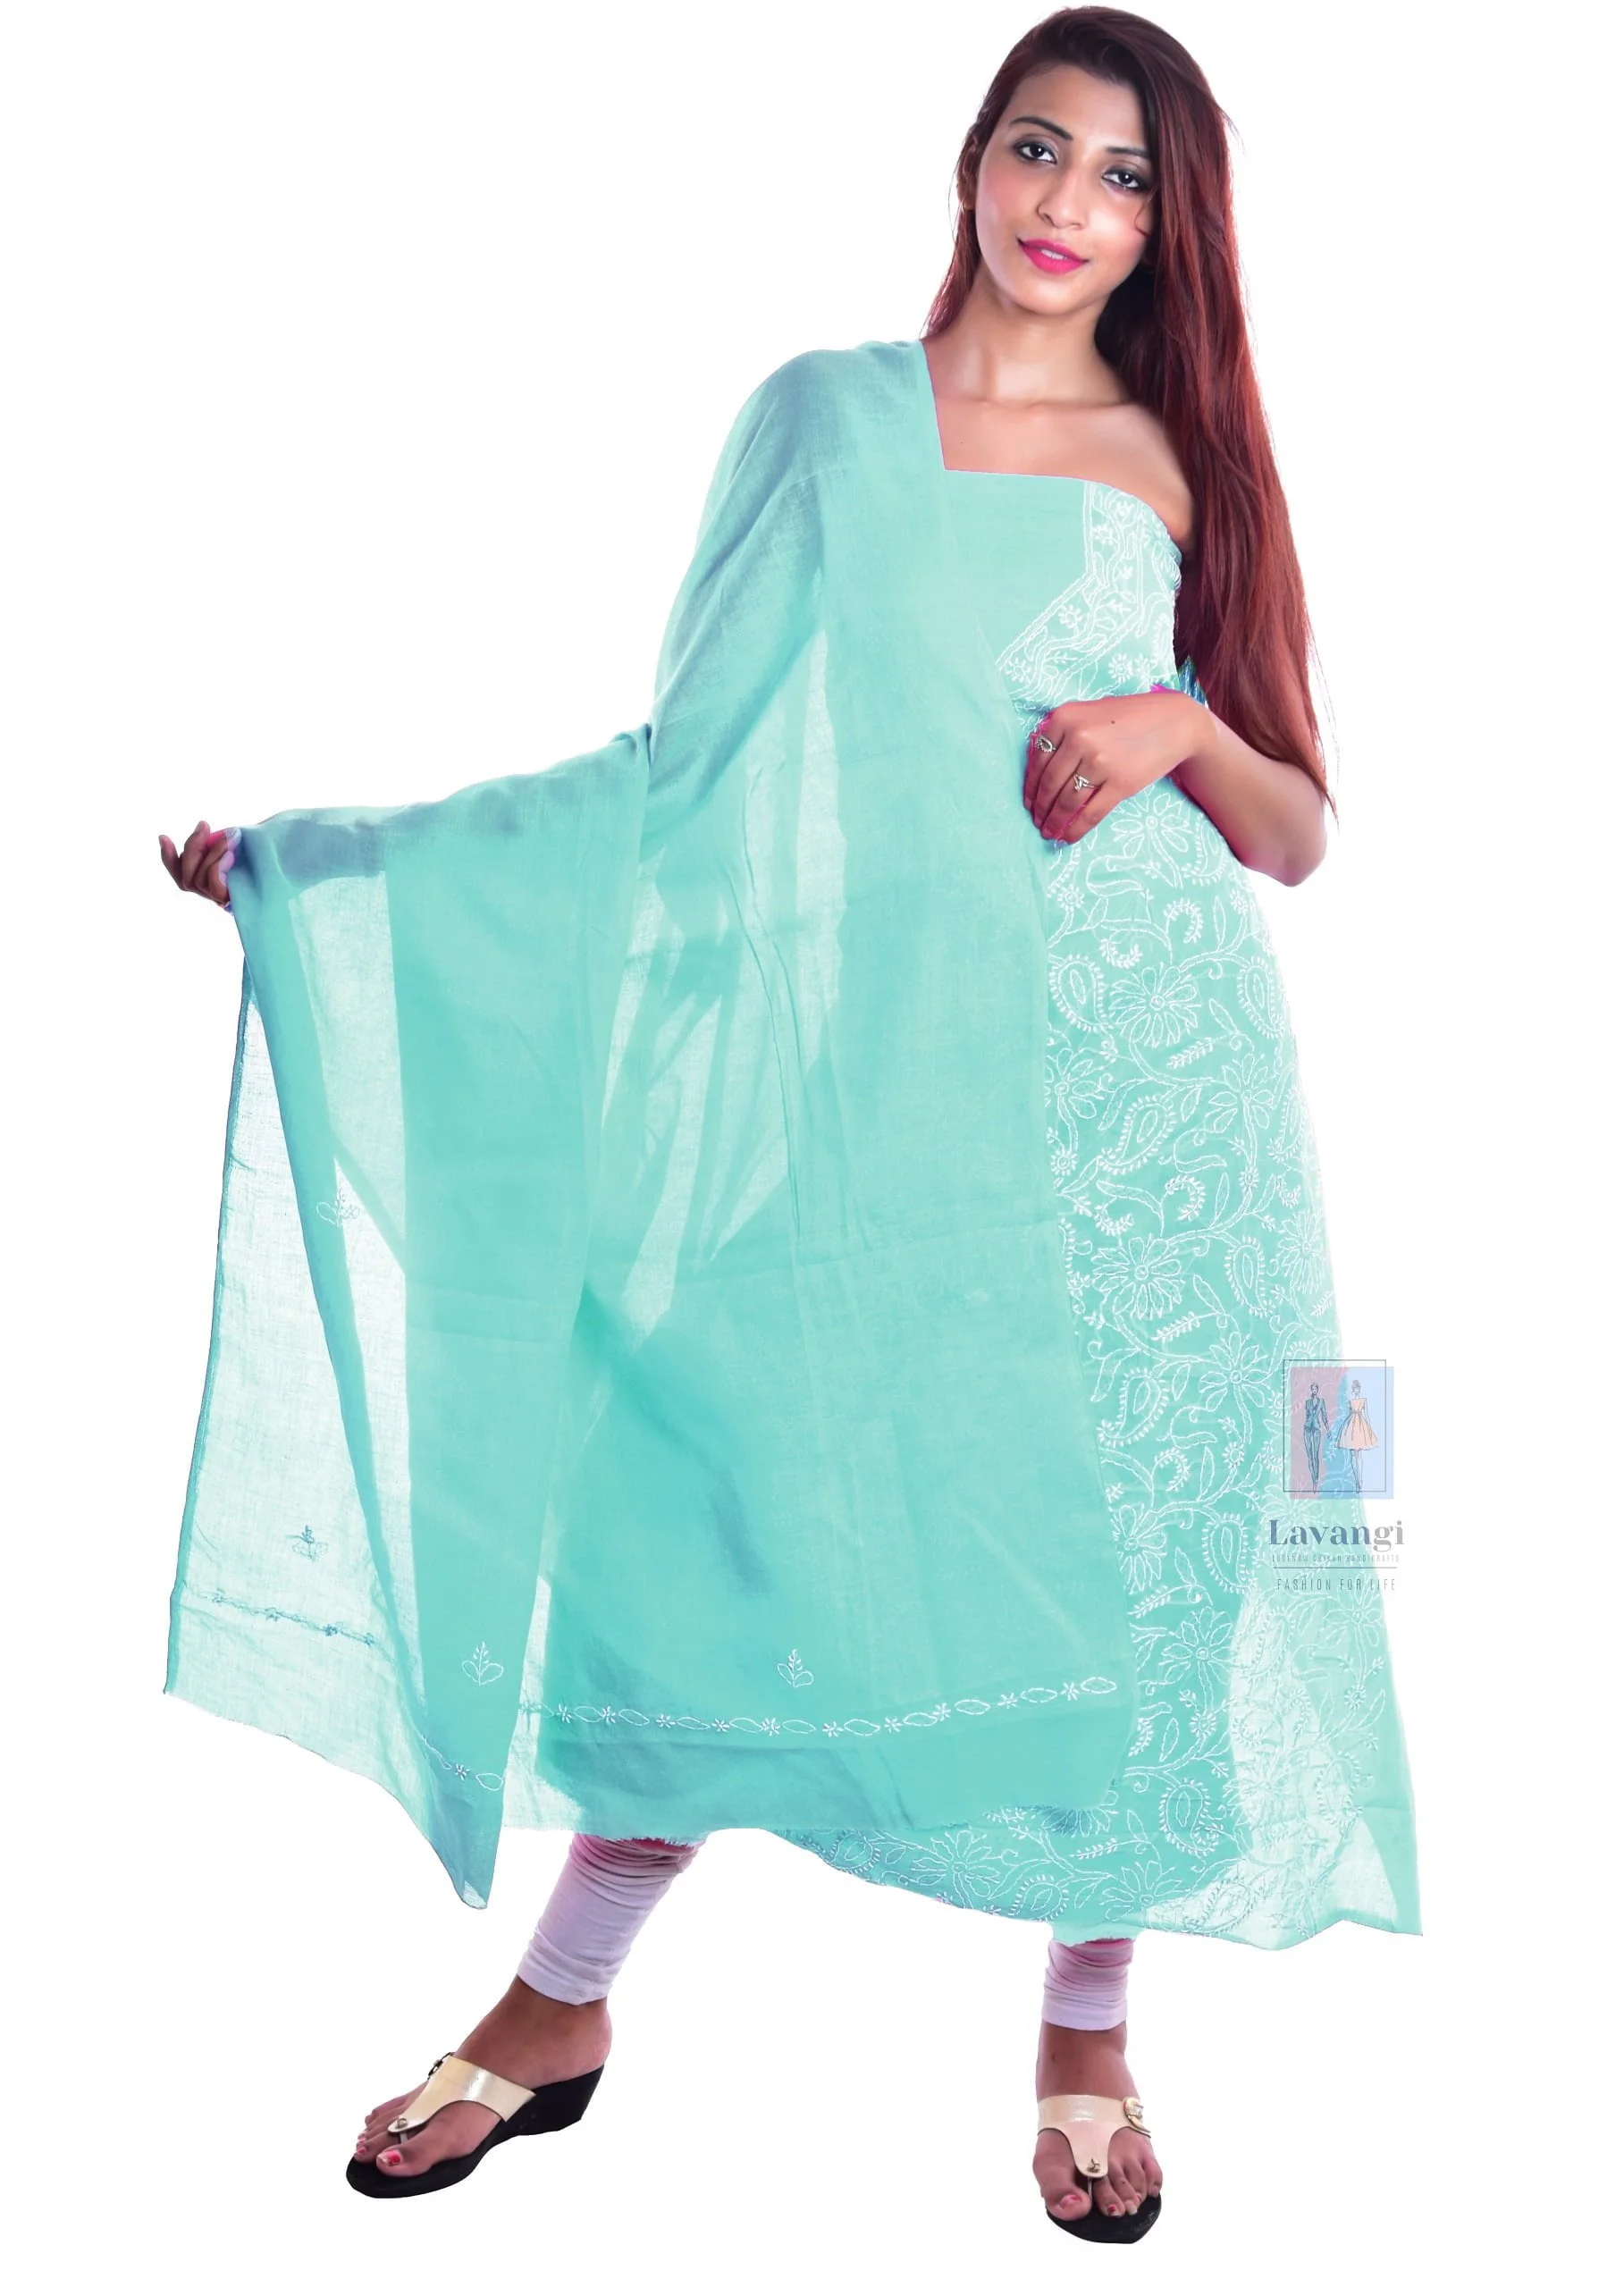 Lavangi Lucknow Chikankari Unstitched Sea Green Cotten Front Jaal Dress Material